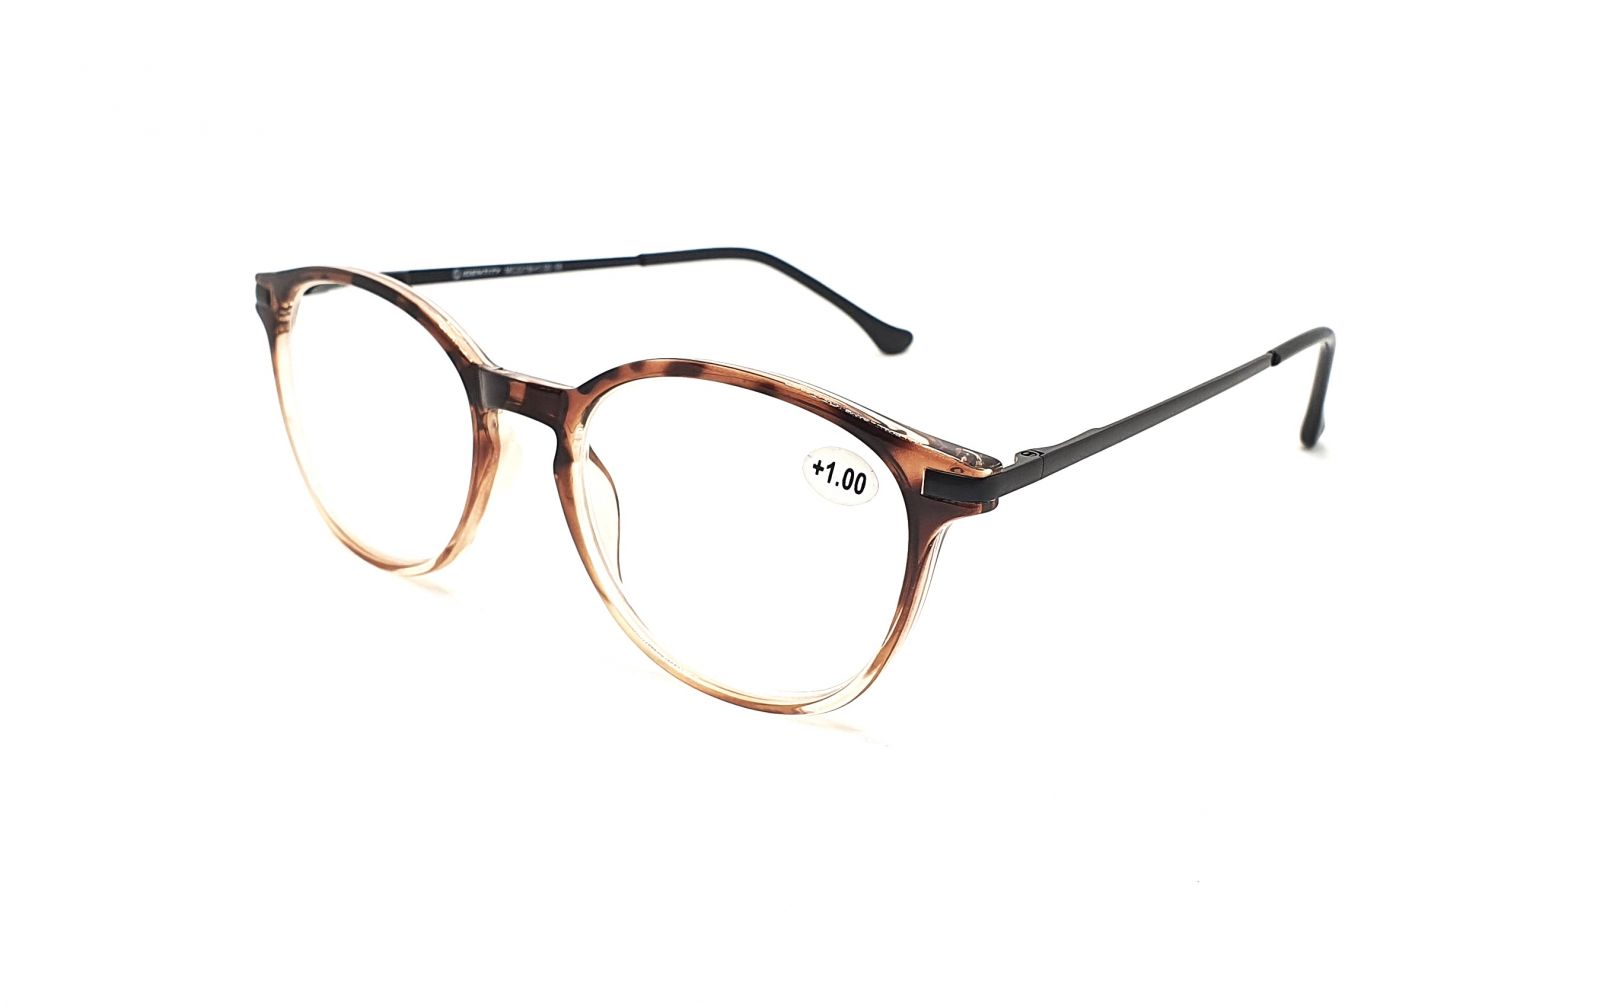 Dioptrické brýle MC2219 +1,50 flex brown